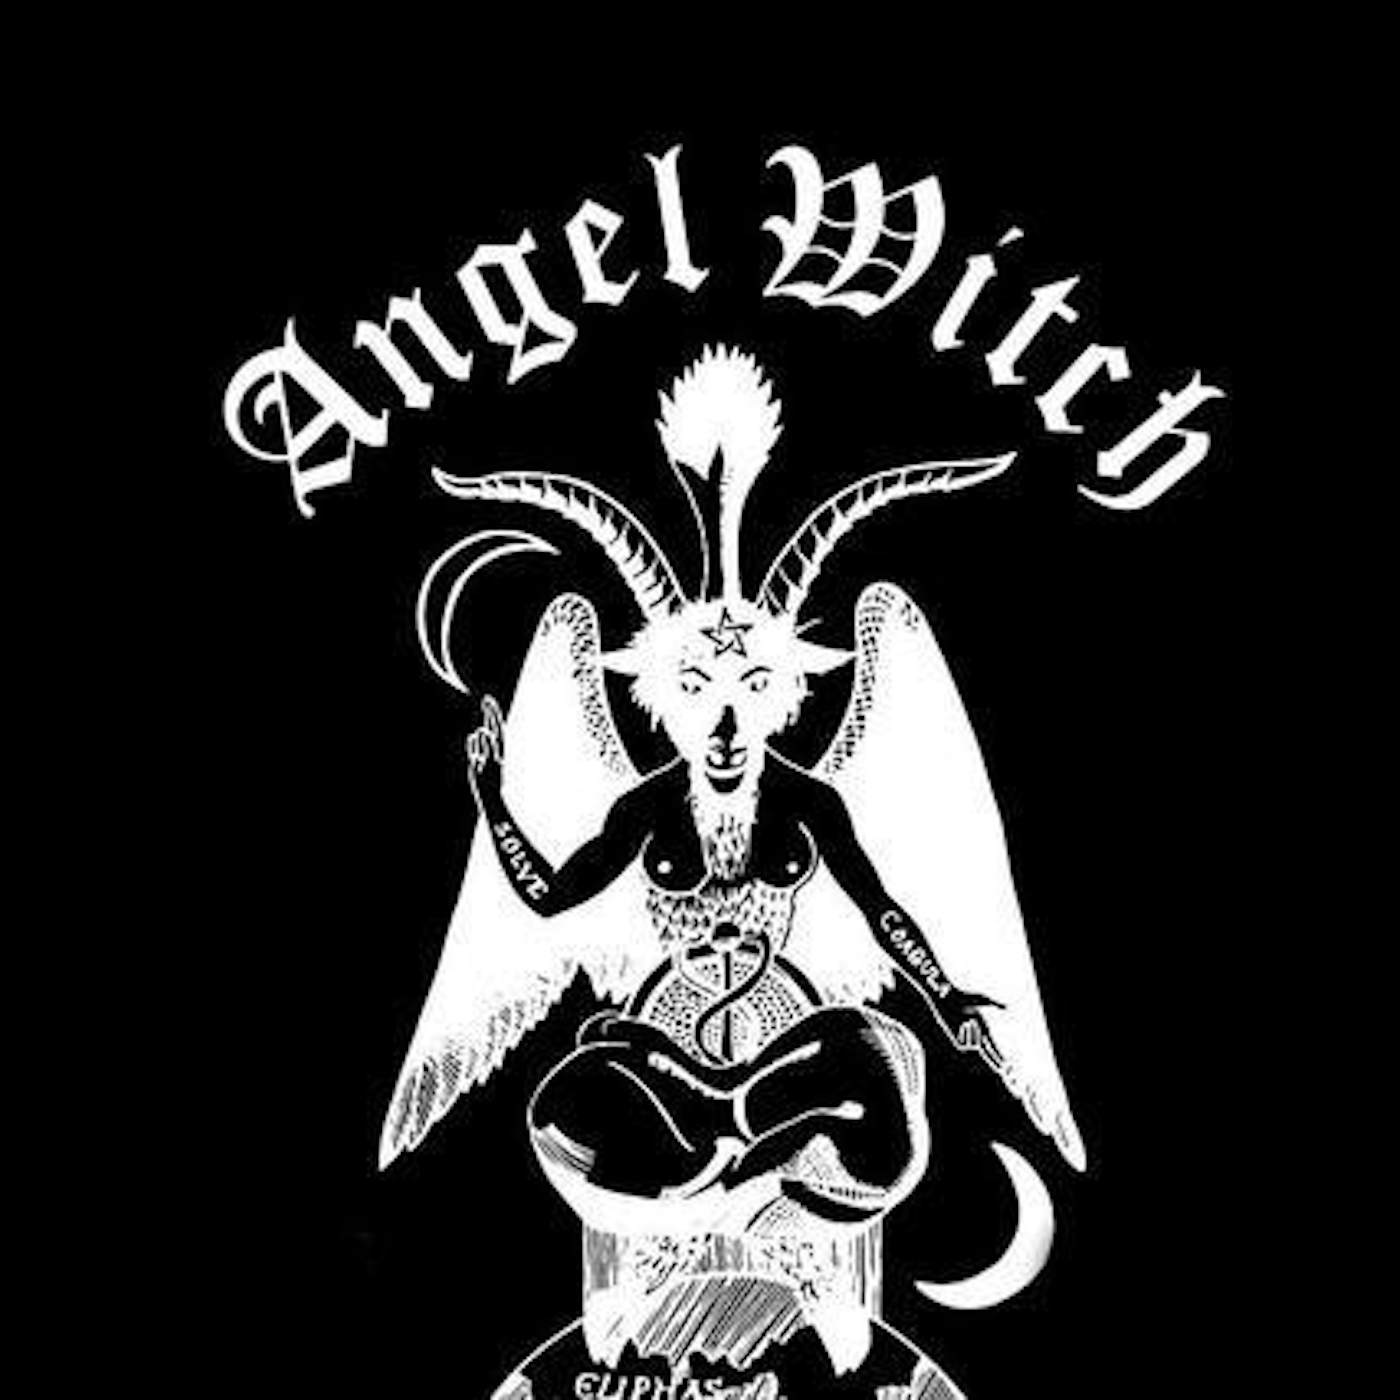 Angel Witch